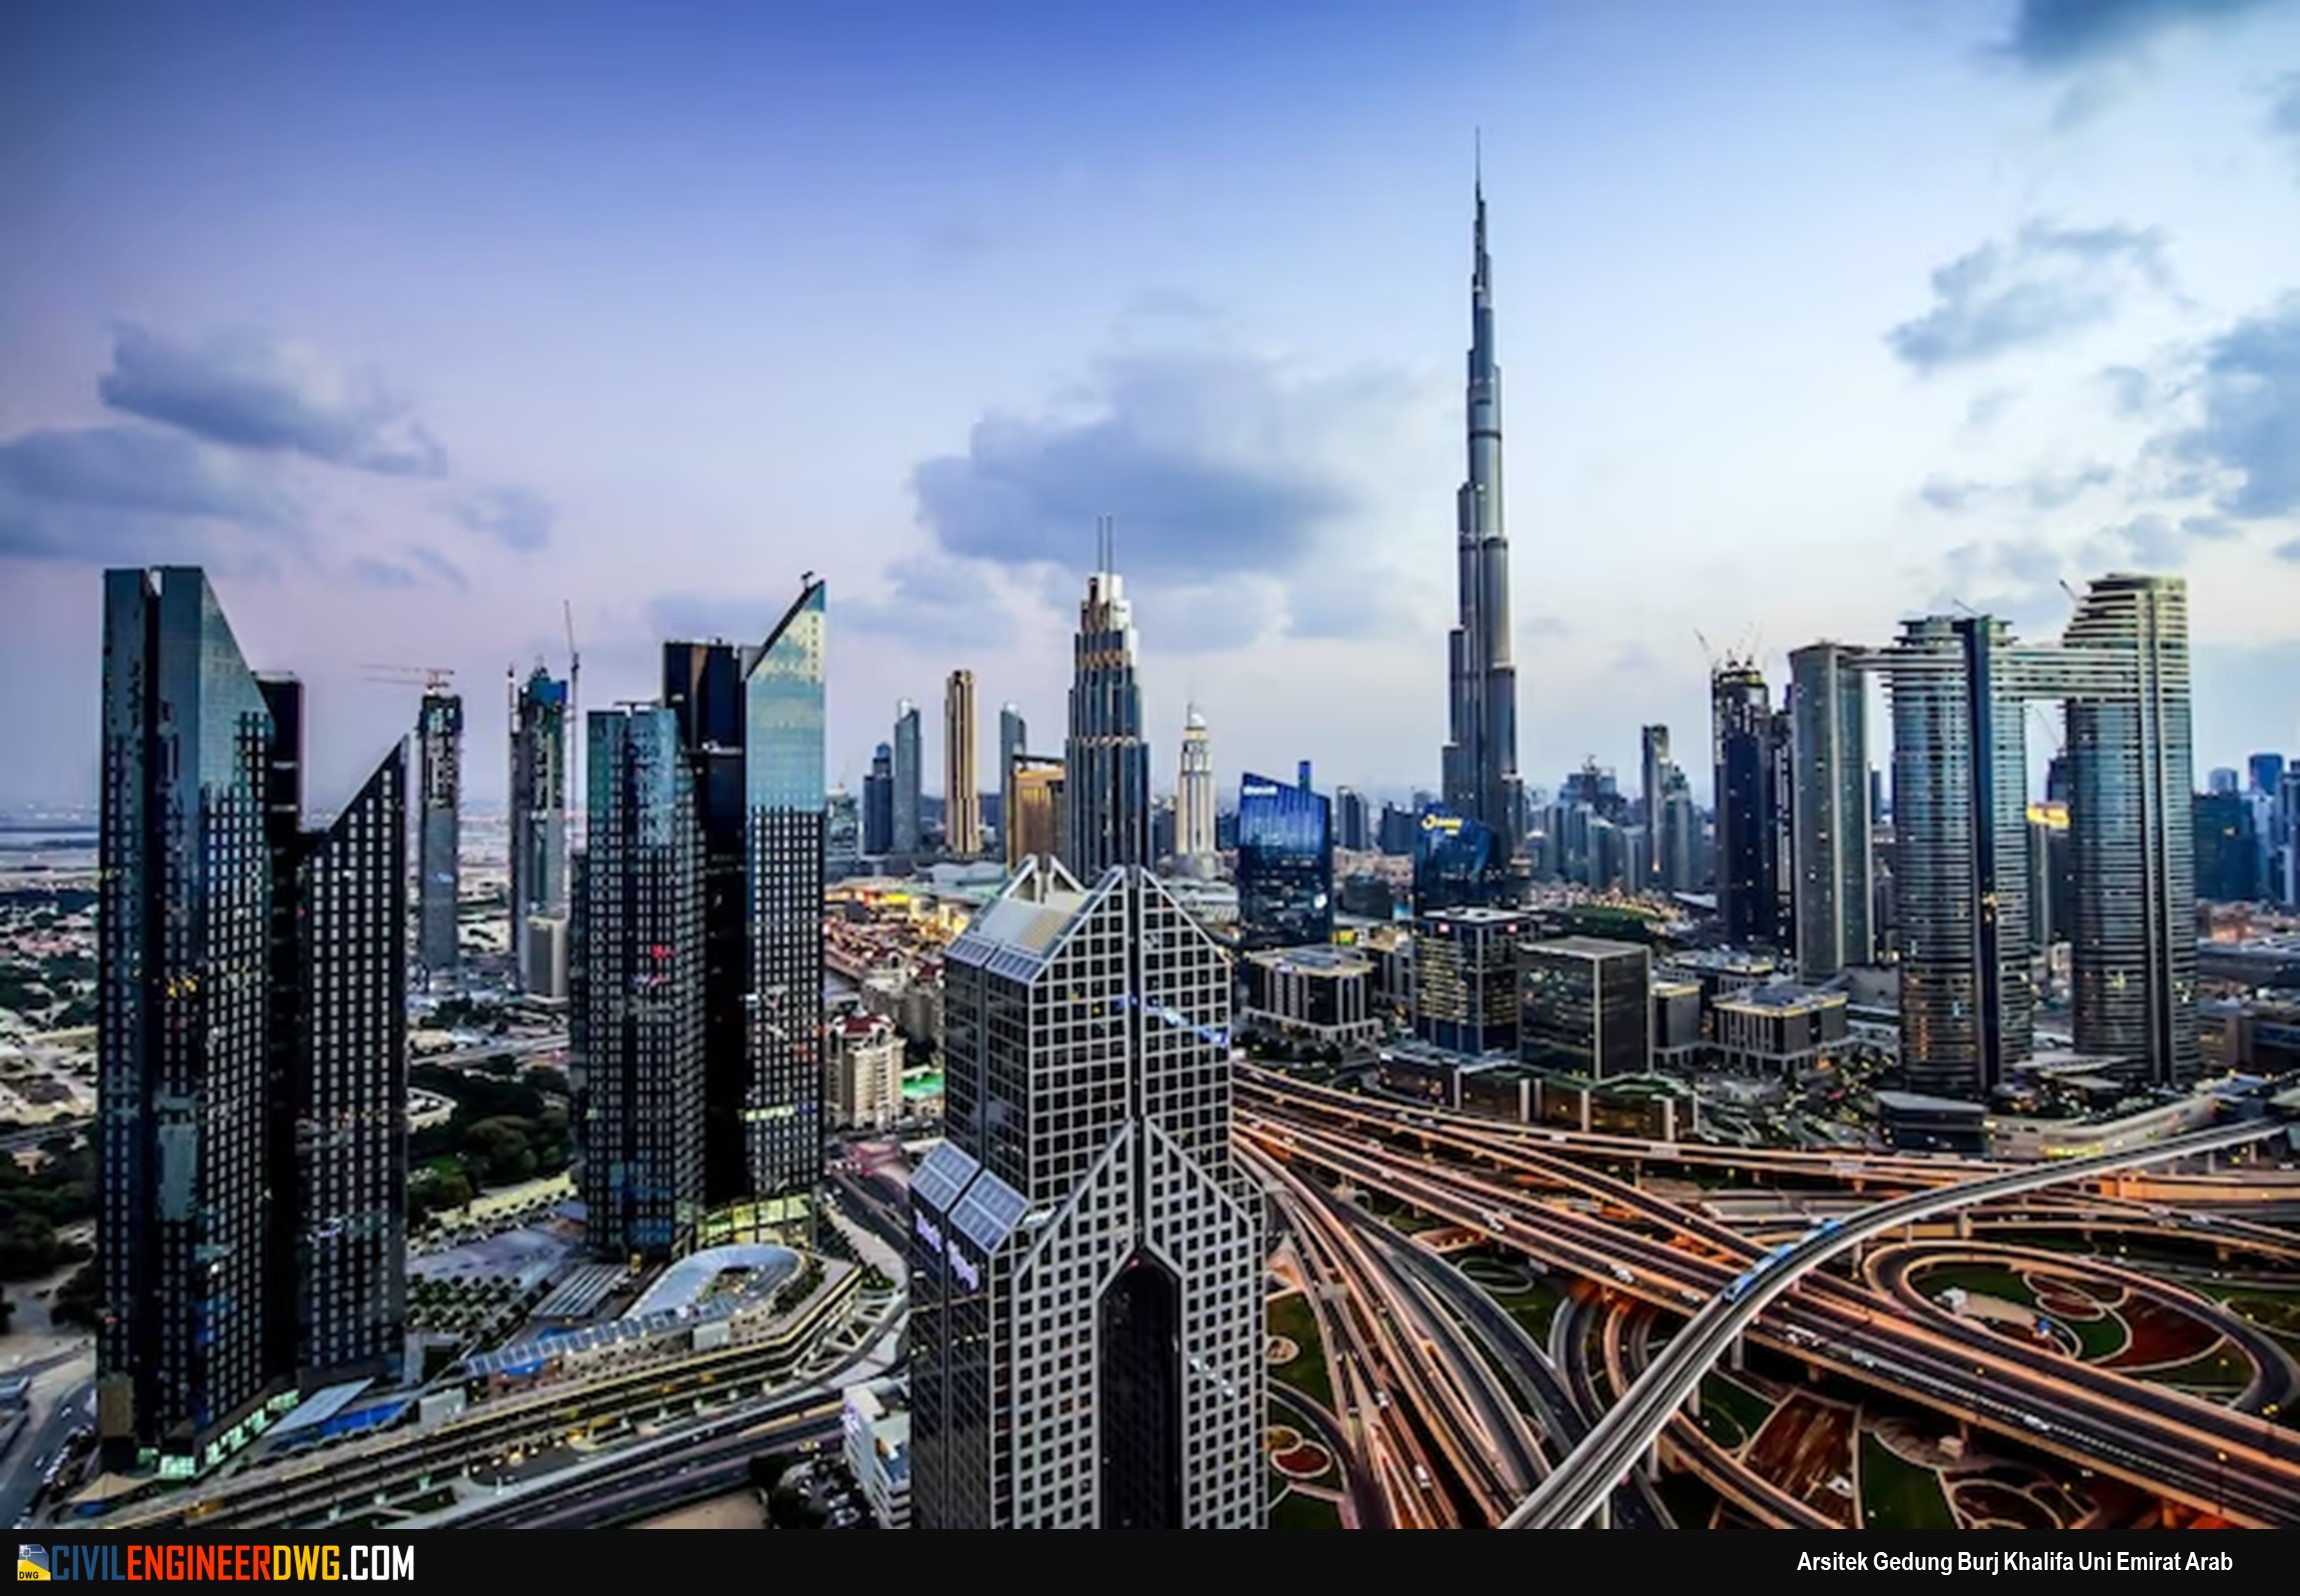 <a href="https://www.civilengineerdwg.com/"><img src="Tinggi Bangunan Burj Khalifa.jpg" alt="Arsitek Gedung Burj Khalifa Uni Emirat Arab"></a>